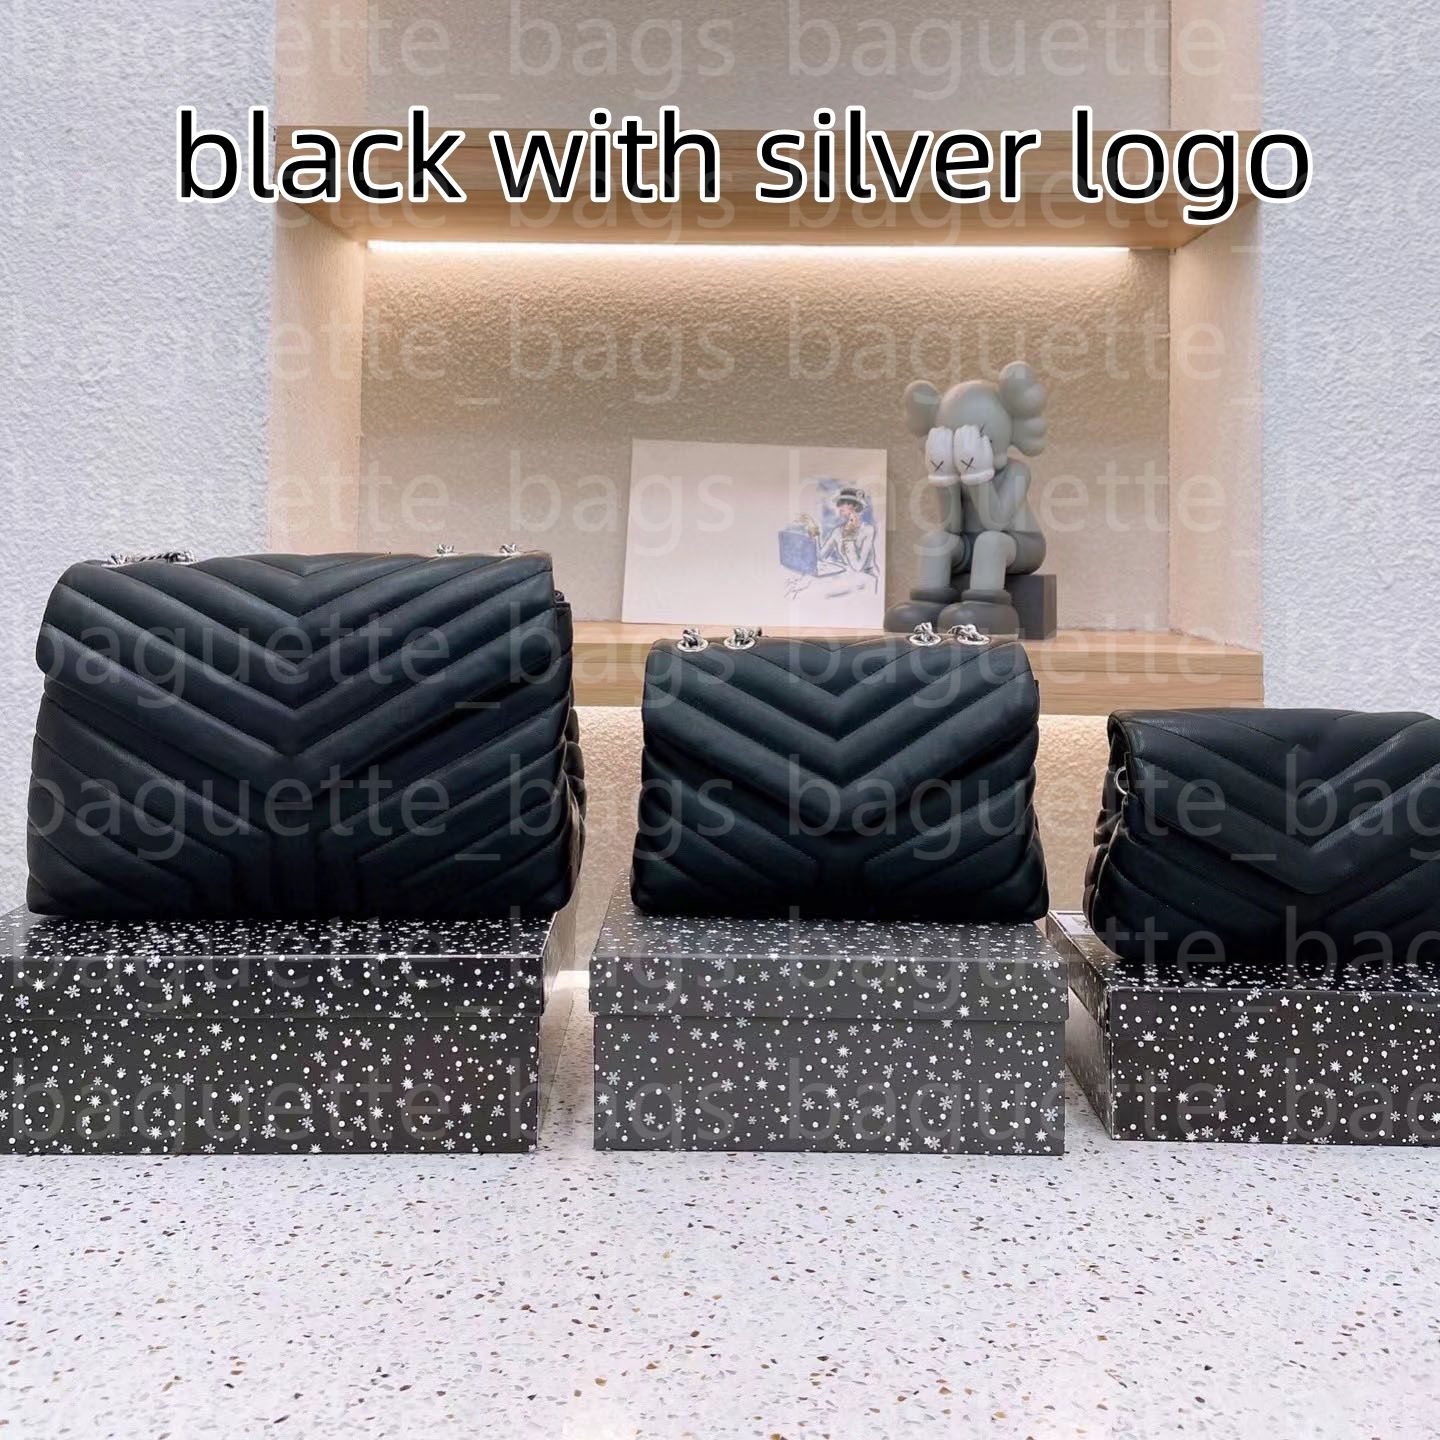 Black_silver logosu